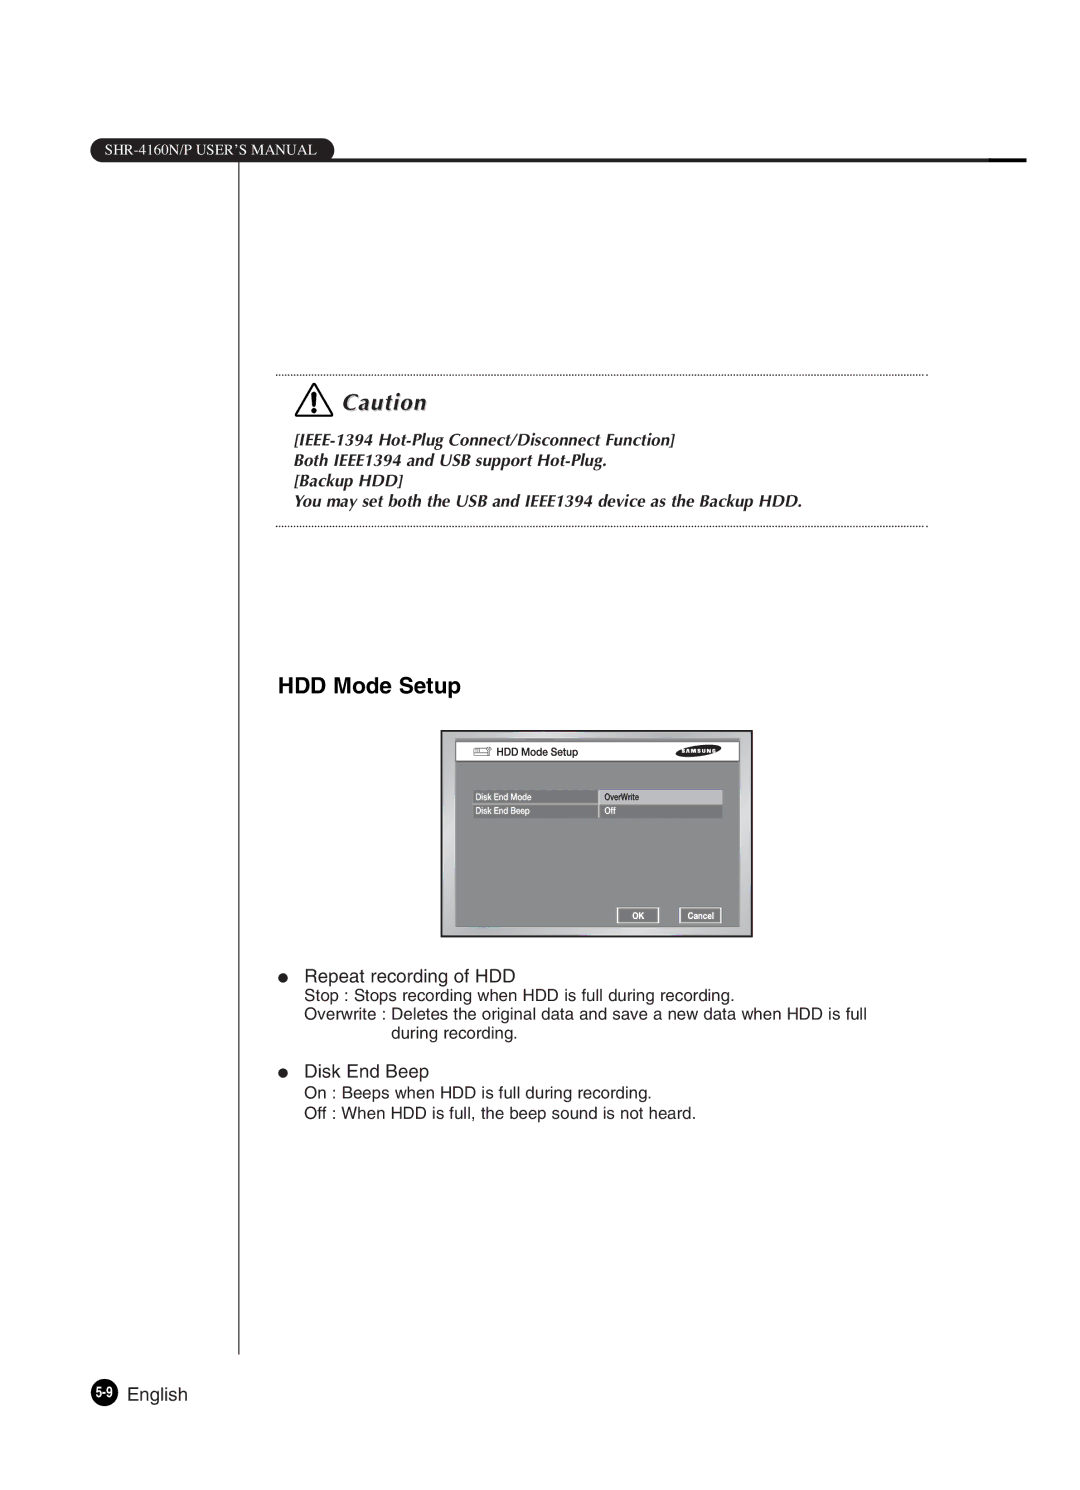 Samsung SHR-4160P manual HDD Mode Setup, Repeat recording of HDD, Disk End Beep 